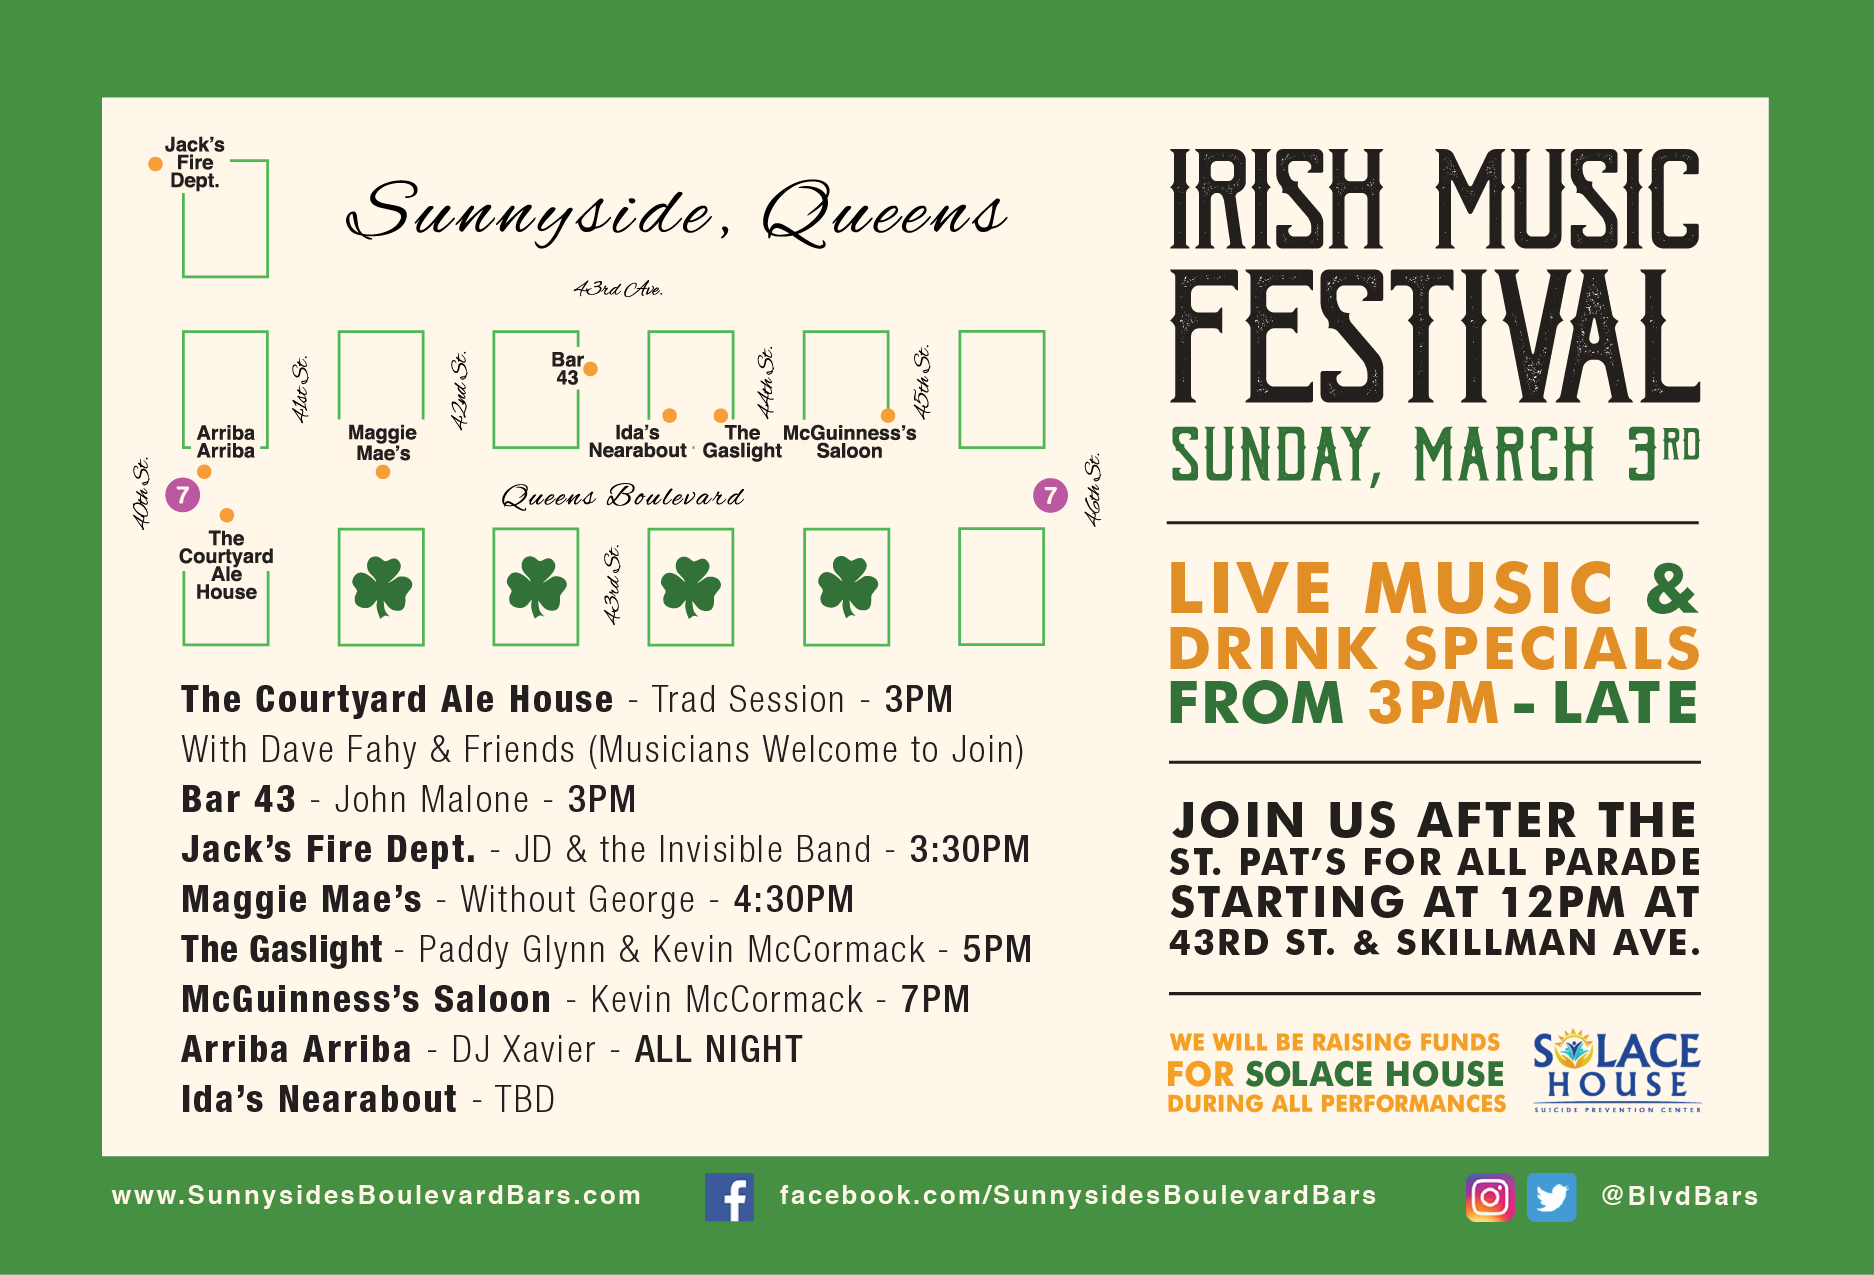 Irish Music Festival Returns to Sunnyside for 7th Year Sunday, Starts